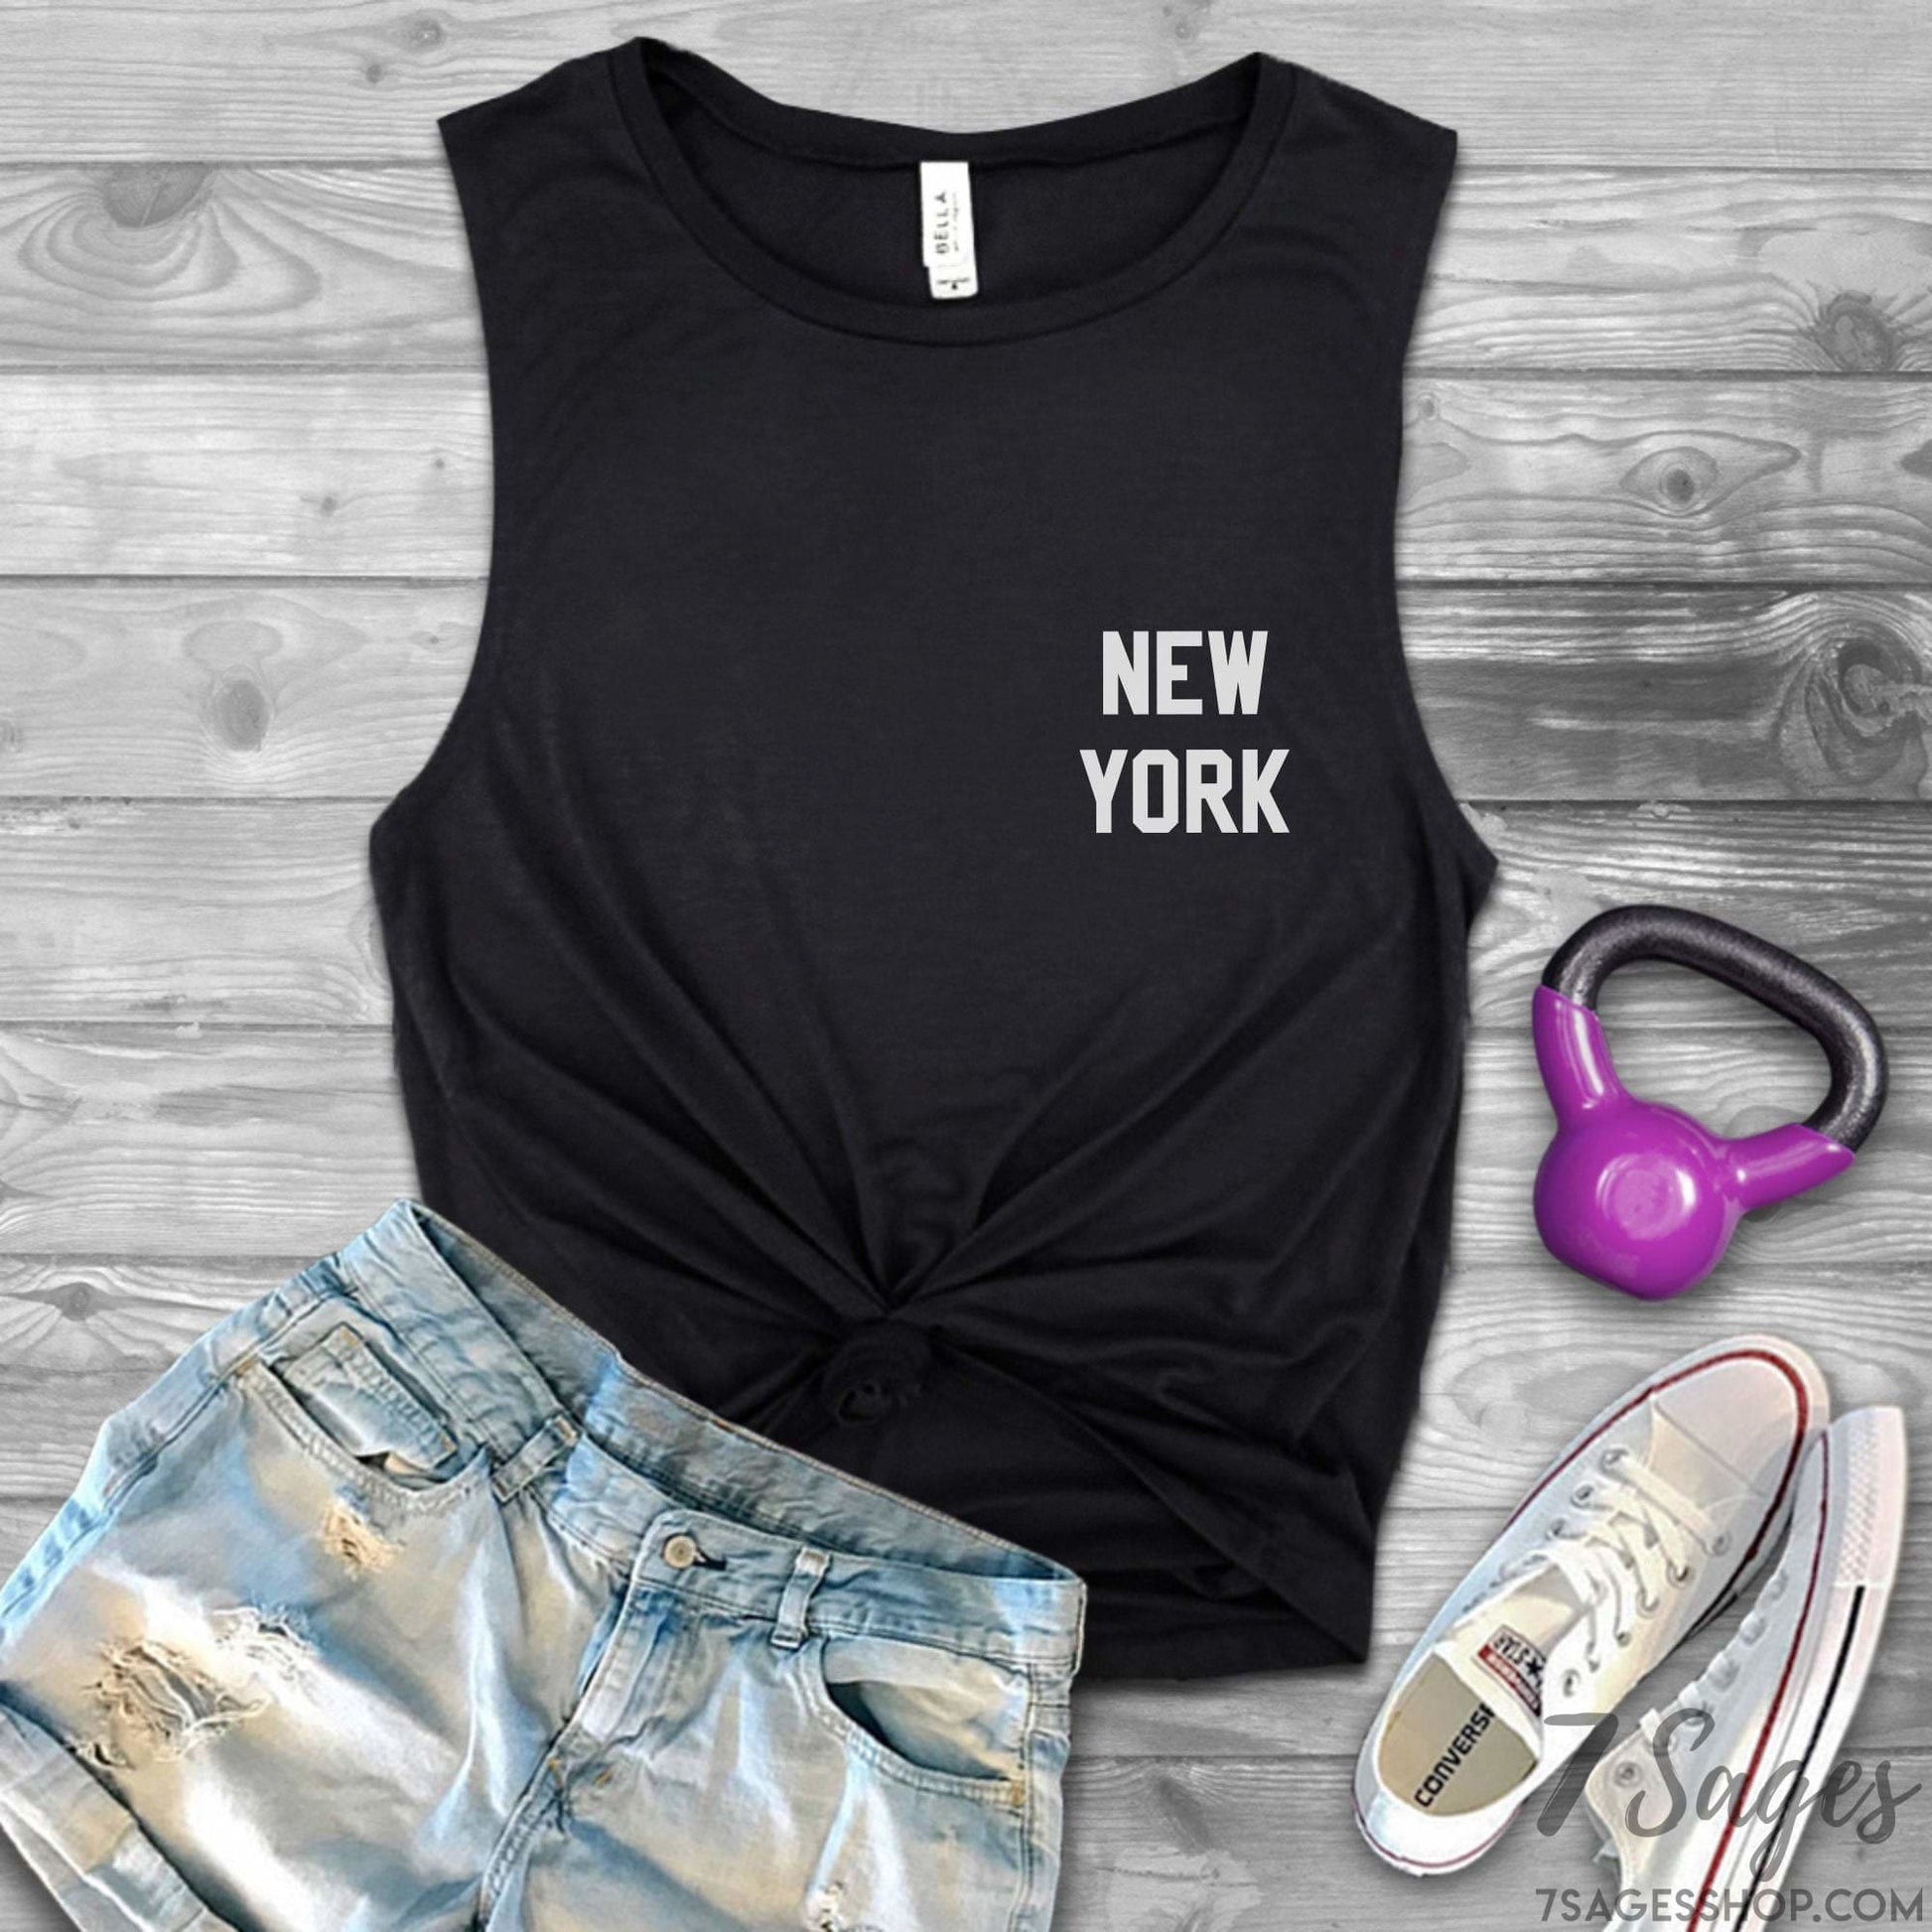 New York Muscle Tank Top - New York Shirt - New York Tank Top - NYC Shirt - NY Shirt - NY Tank Top - New York City Shirt